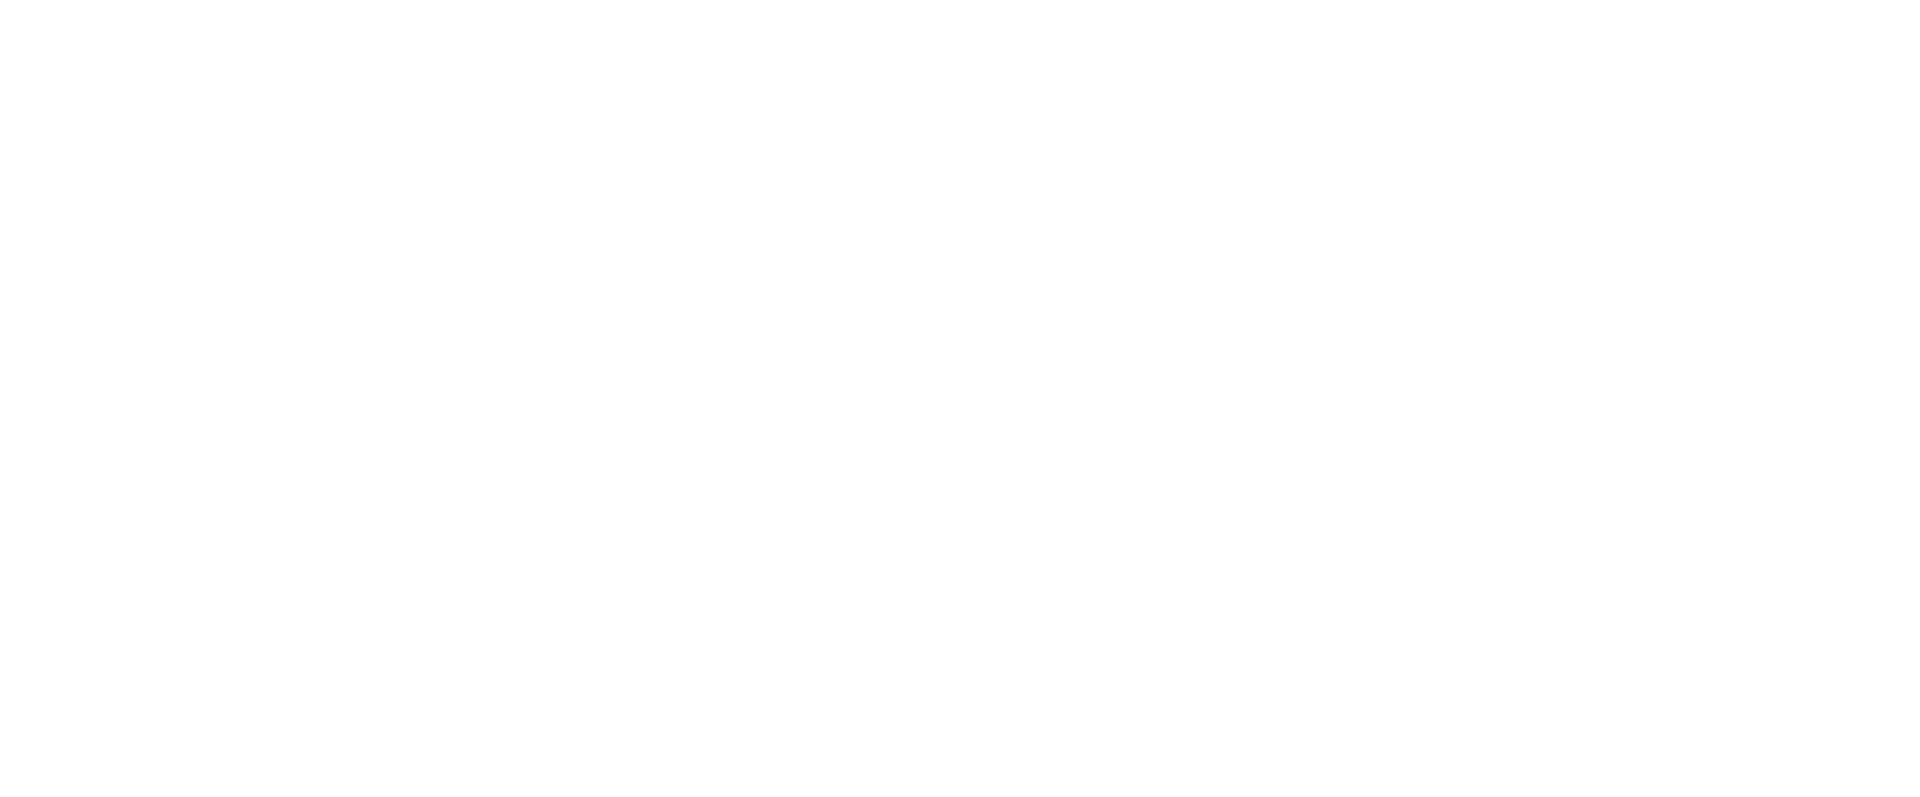 International Year Zero - University of Greenwich International College logo